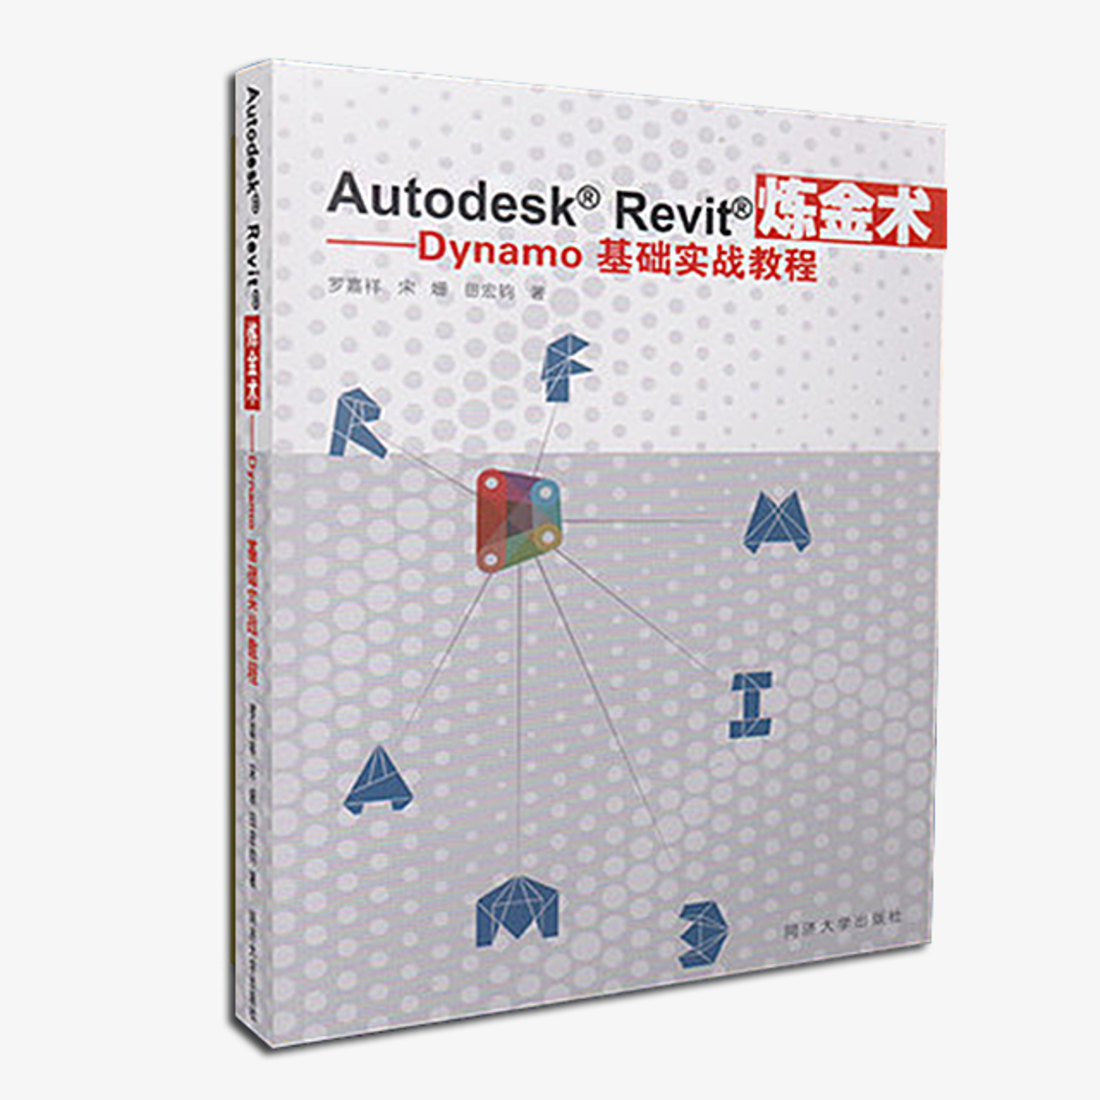 《Autodesk Revit 炼金术》--Dynamo 基础实战教程